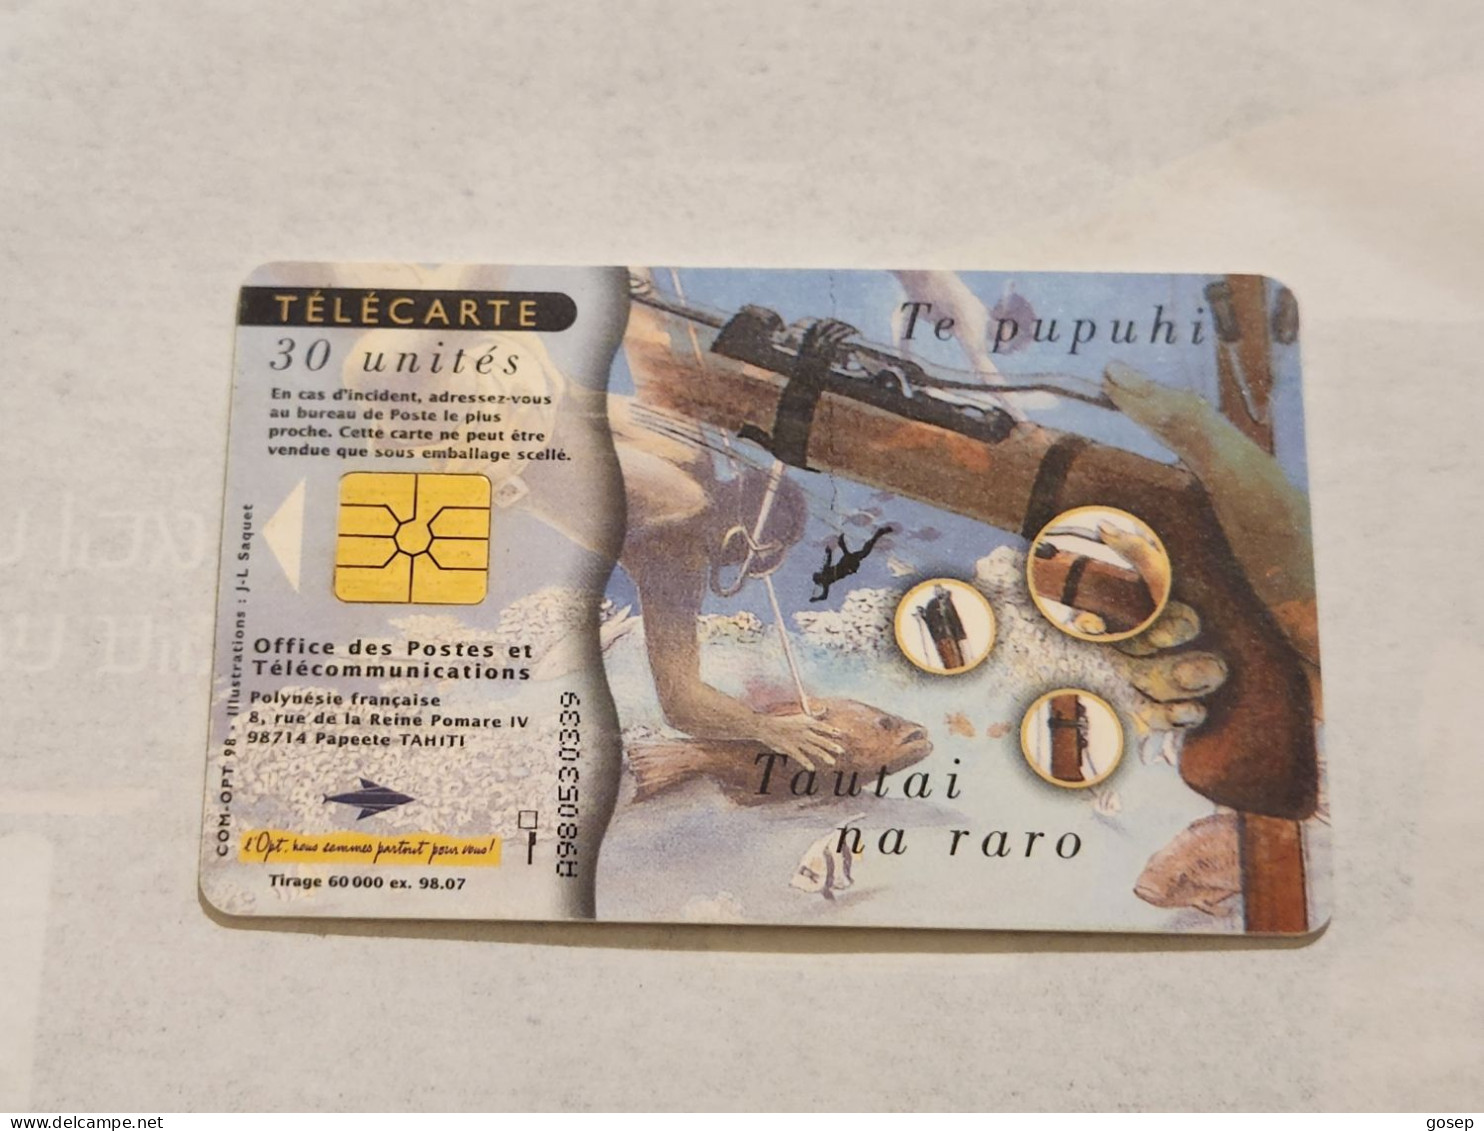 French Polynesia-(FP-076B)-La Peche Au Fusil-(28)(A980530339)-(30units)-(tirage-60.000)-used Card+1card Prepiad Free - French Polynesia